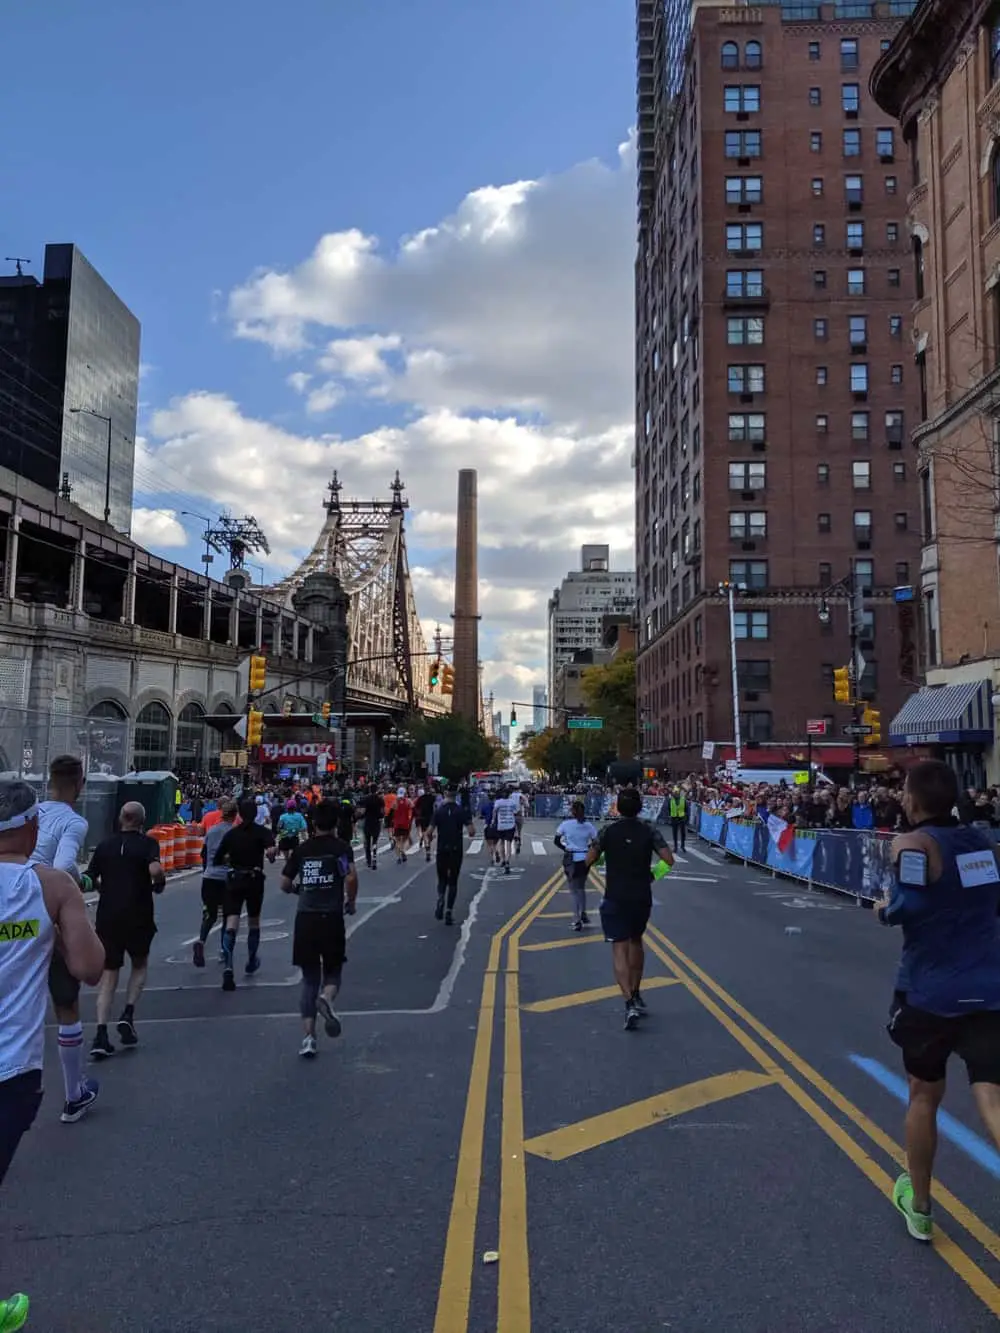 TCS New York City Marathon 2019